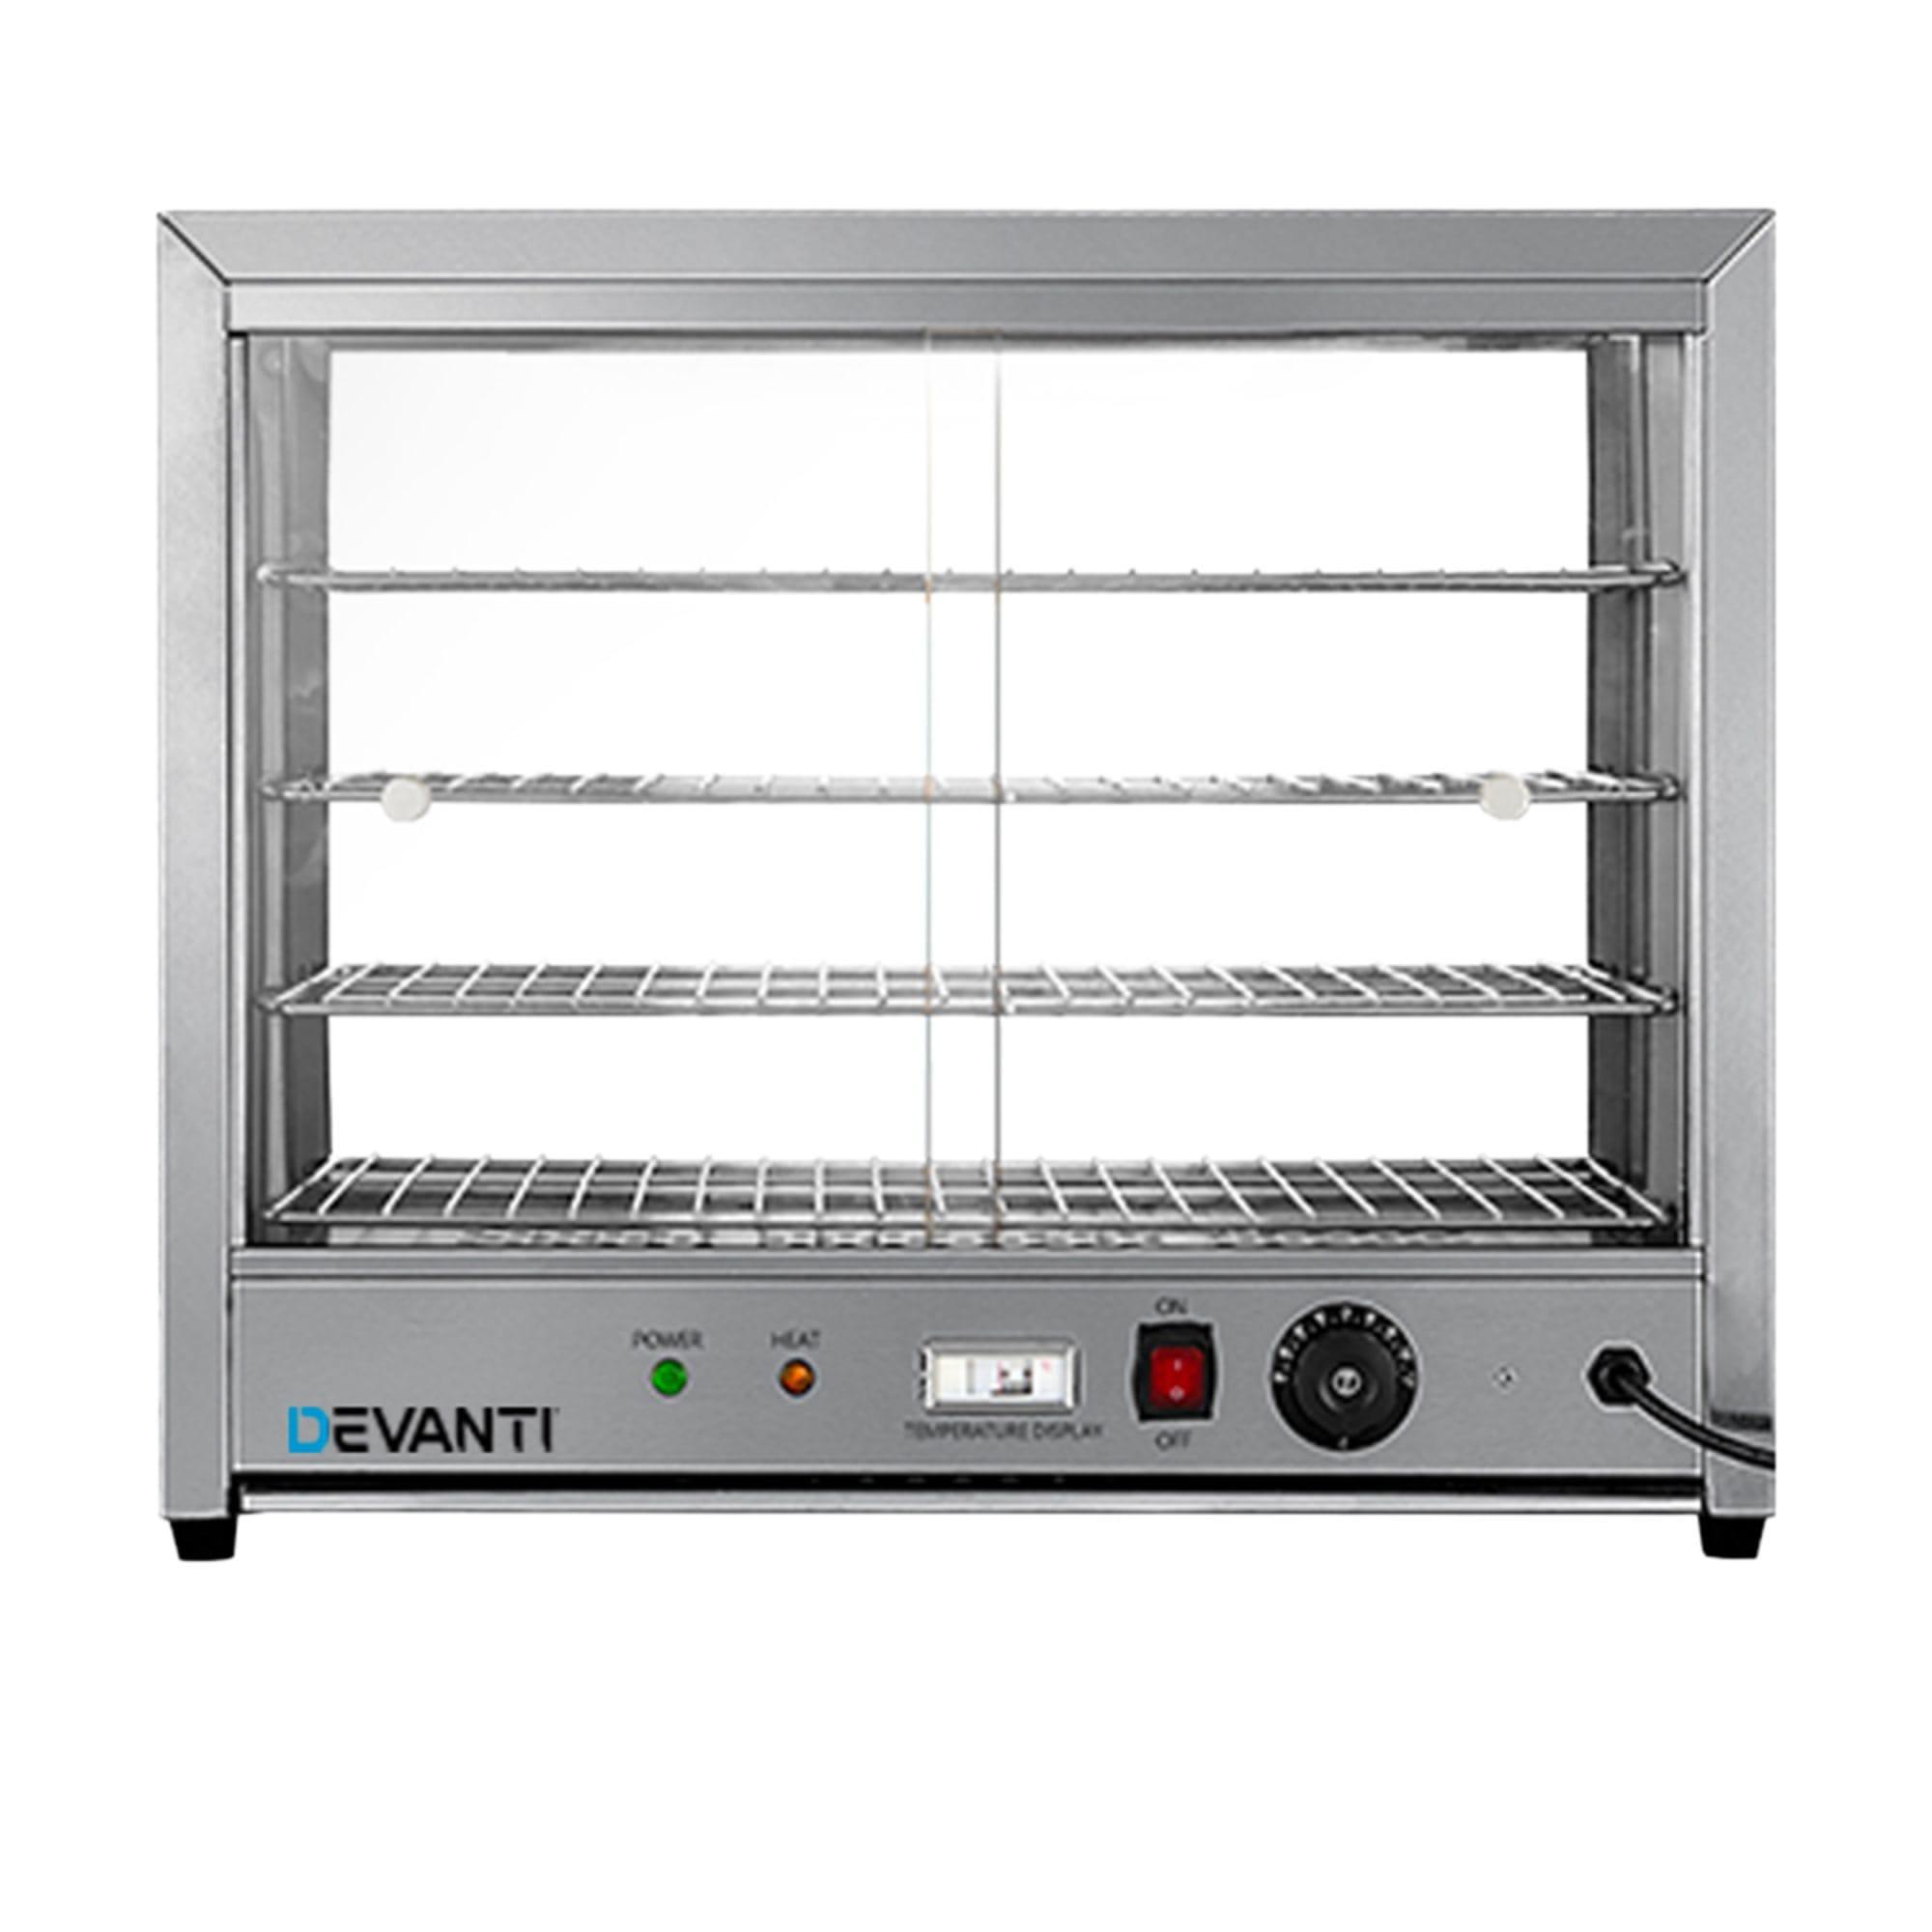 Devanti 4 Tier Commercial Food Warmer Display Cabinet Image 3